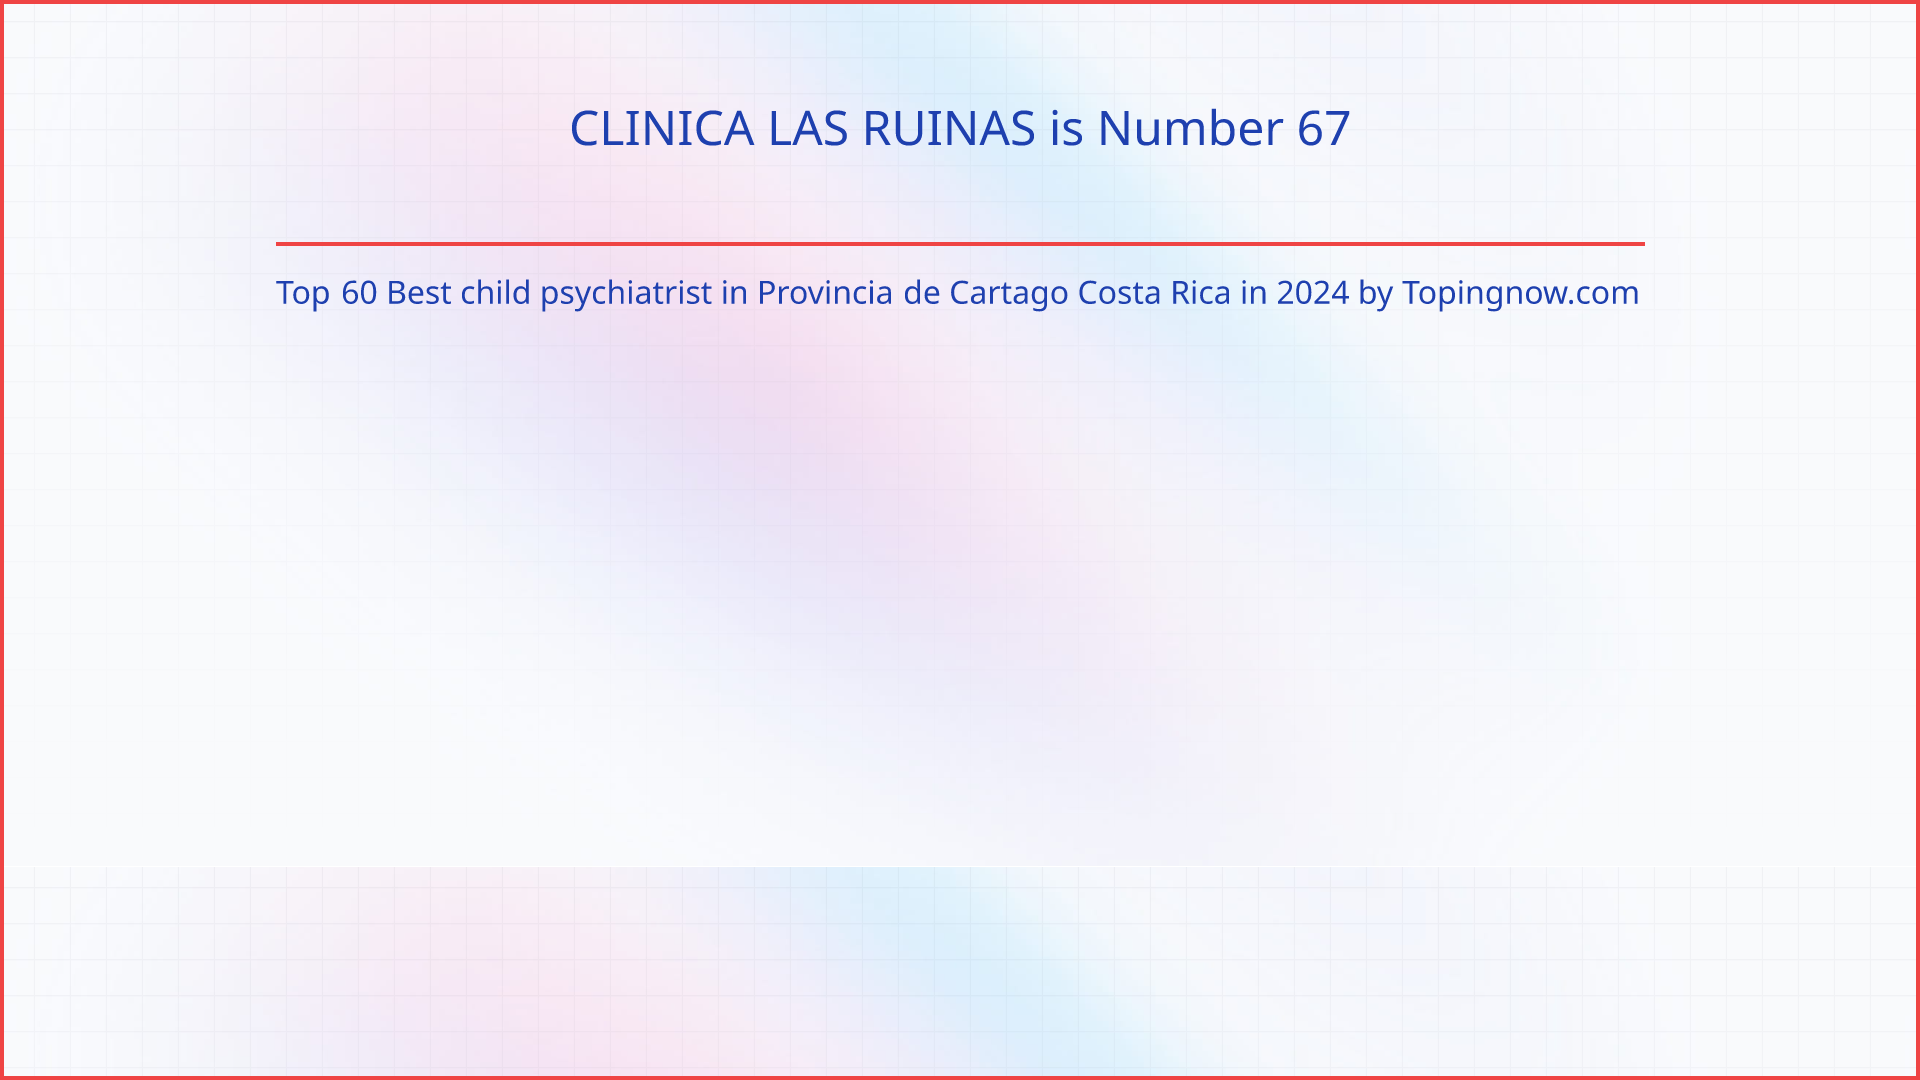 CLINICA LAS RUINAS: Top 60 Best child psychiatrist in Provincia de Cartago Costa Rica in 2024